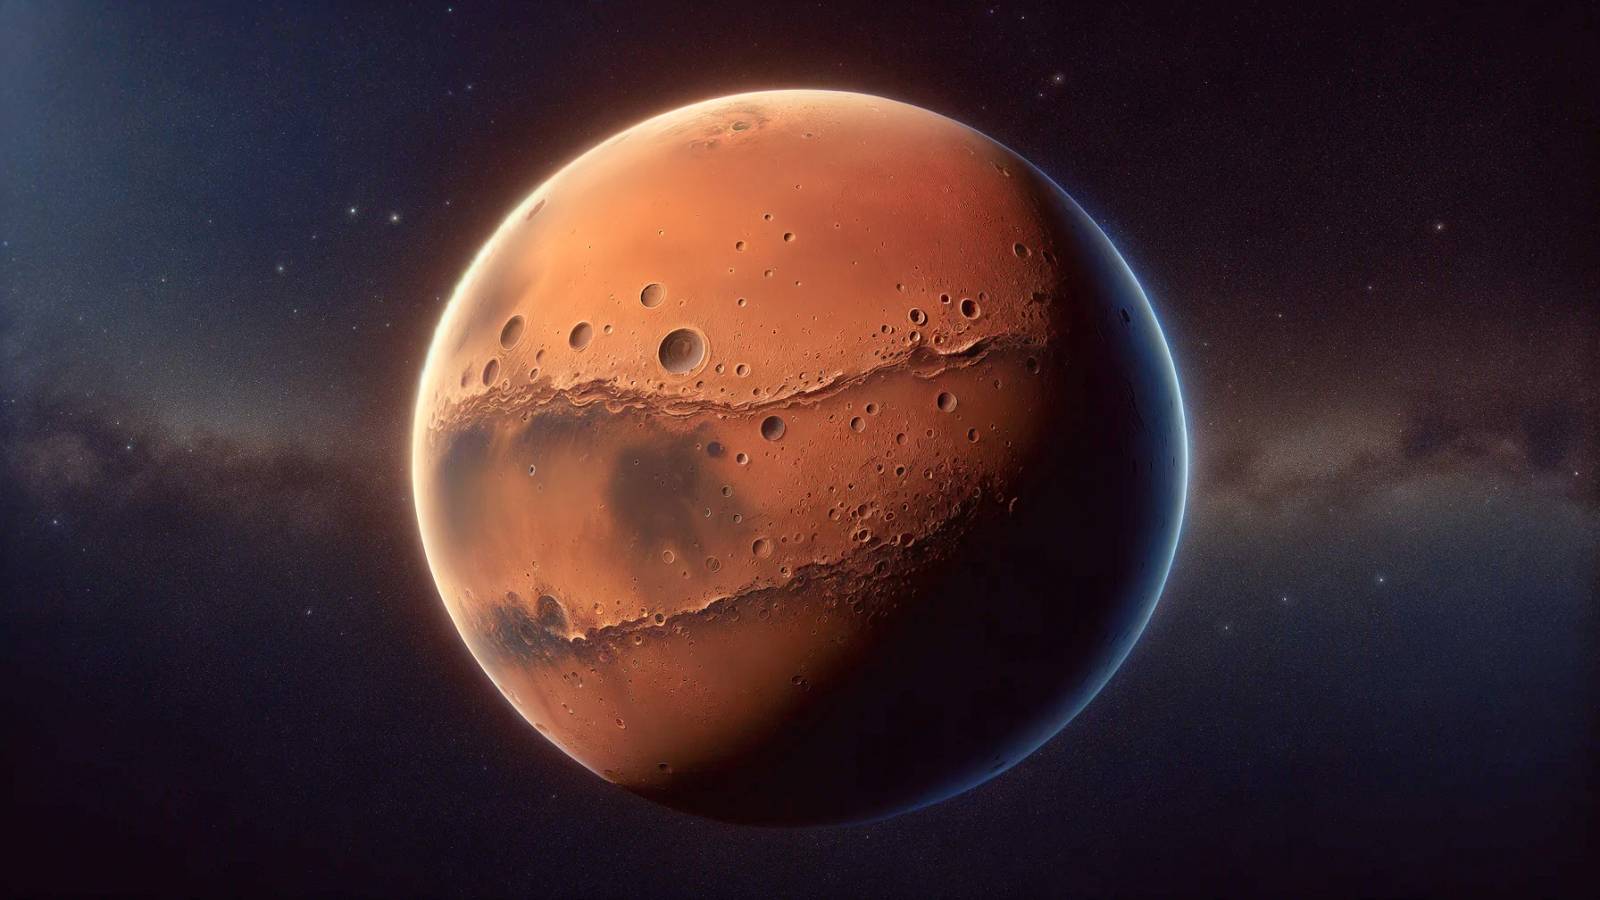 ESA Descoperire IMPRESIONANTA Planeta Marte Anuntata Cercetatori